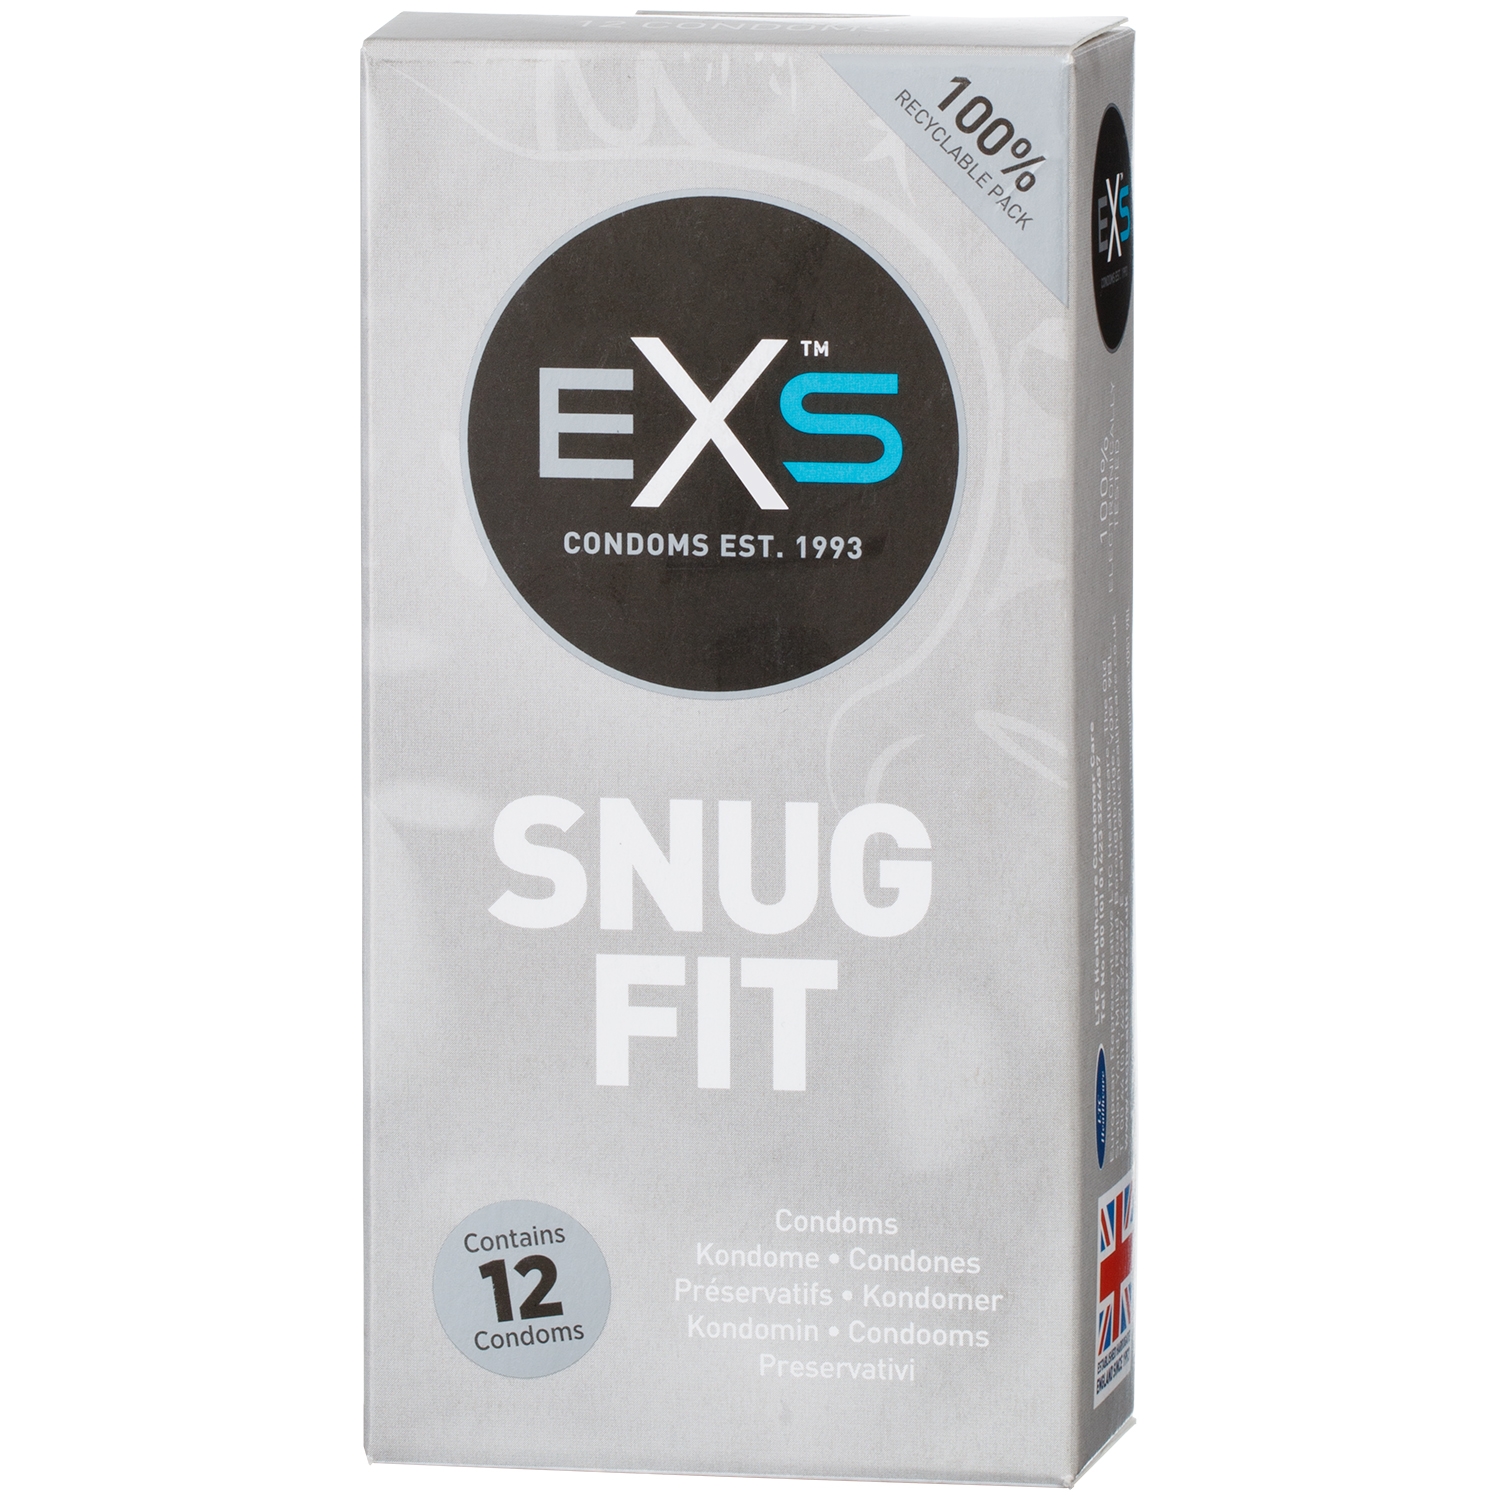 EXS EXS Snug Fit Kondomer 12 stk - Klar